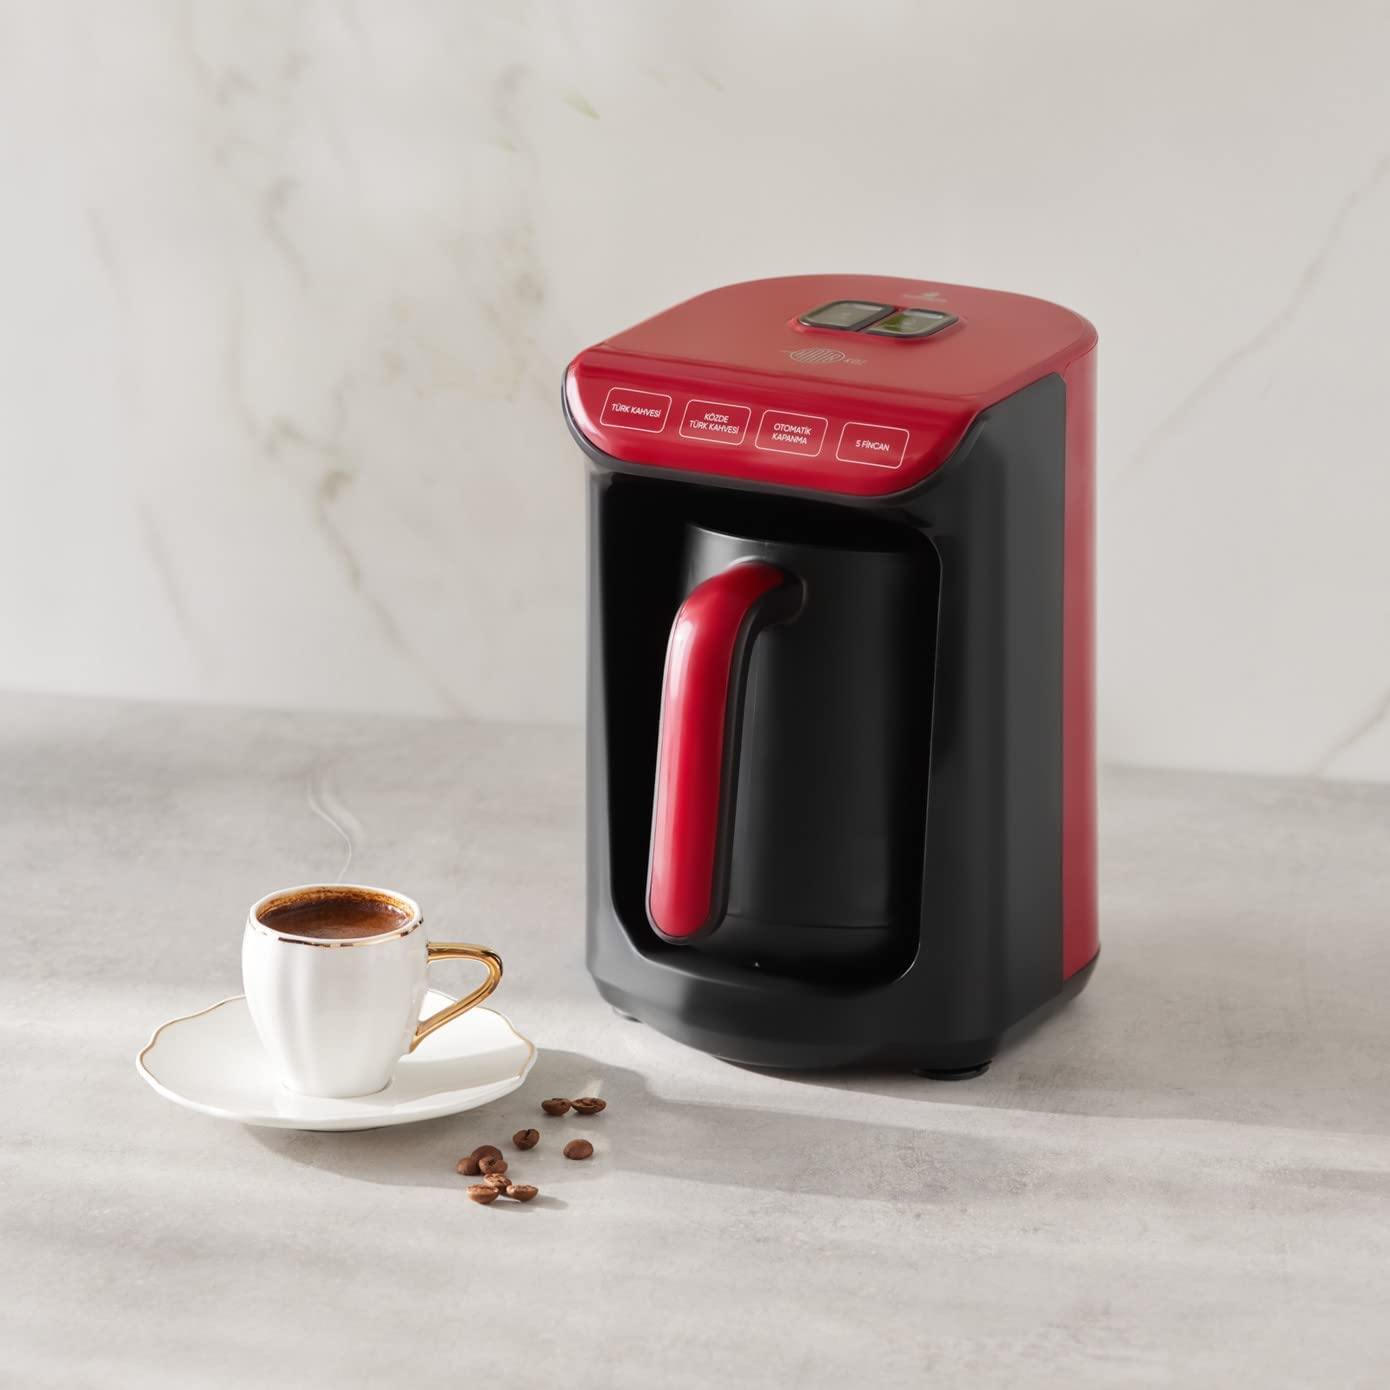 Karaca Hatır Roast Turkish Coffee Machine Red 5 Capacity Capacity Lots of Foam, 535 W, Voice Warning System, Light Warning System, Measuring Spoon, Easy Cleaning